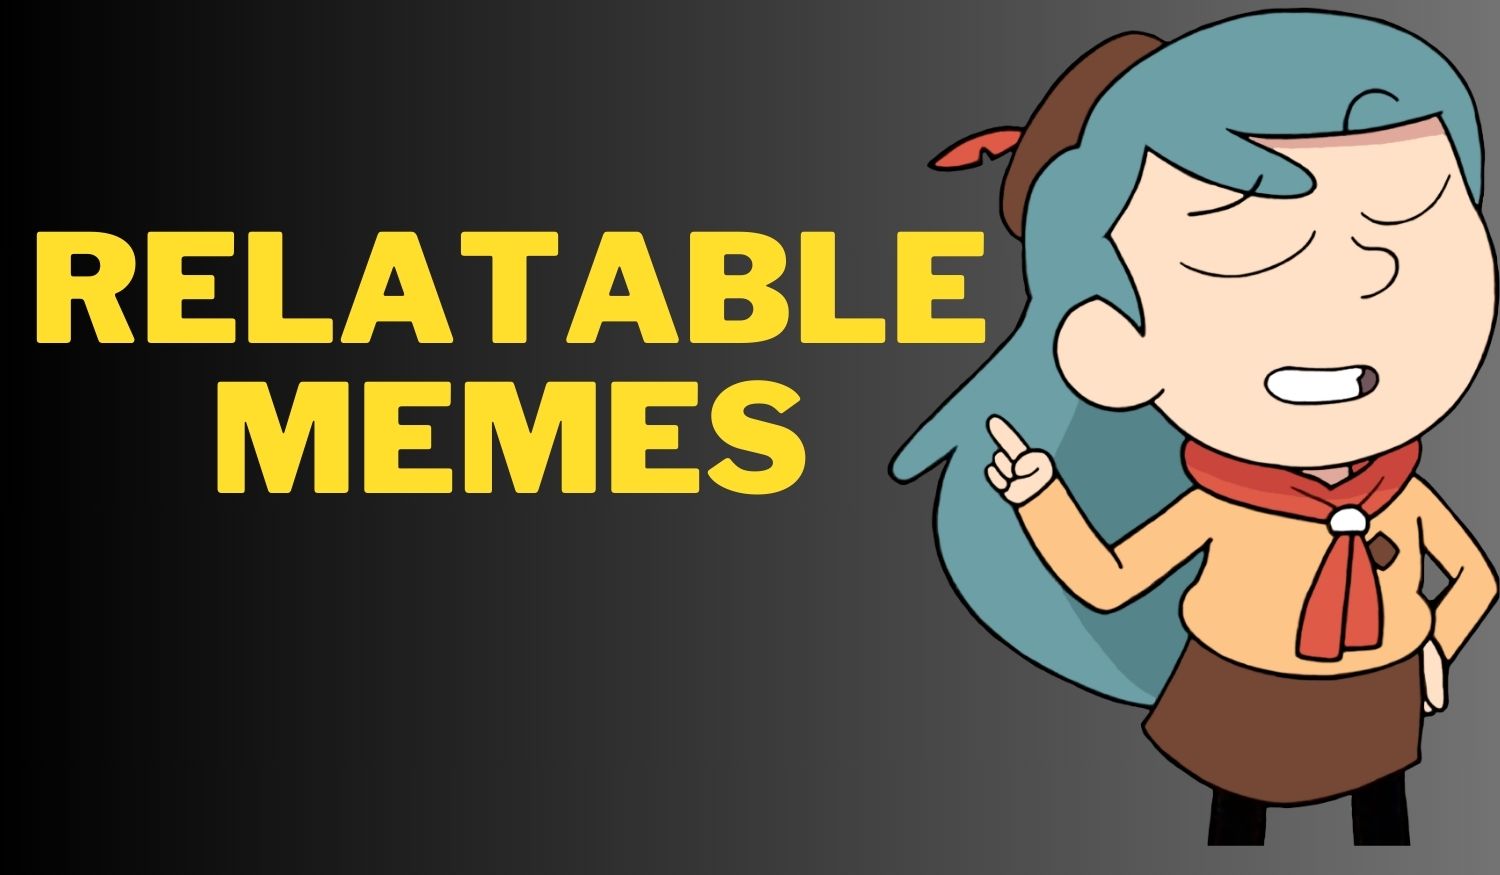 What Do You Meme?® SpongeBob Family Edition Card Game – Relatable